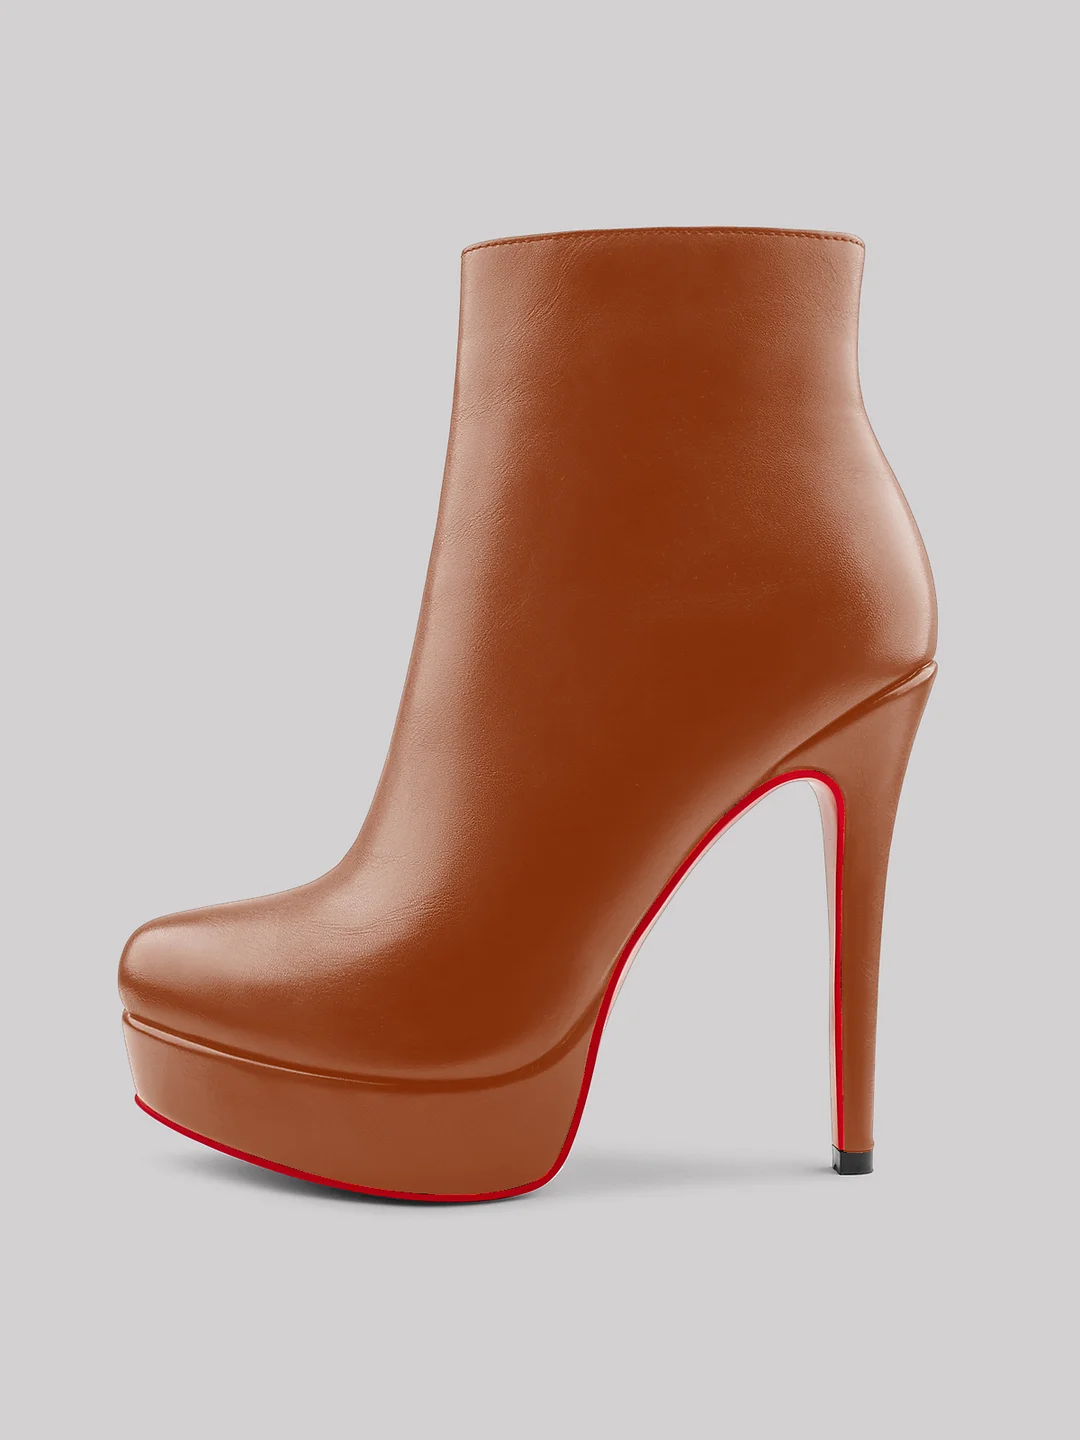 120mm Women's Platform Heels Fashion Bianca Booty Red Bottom Shoes